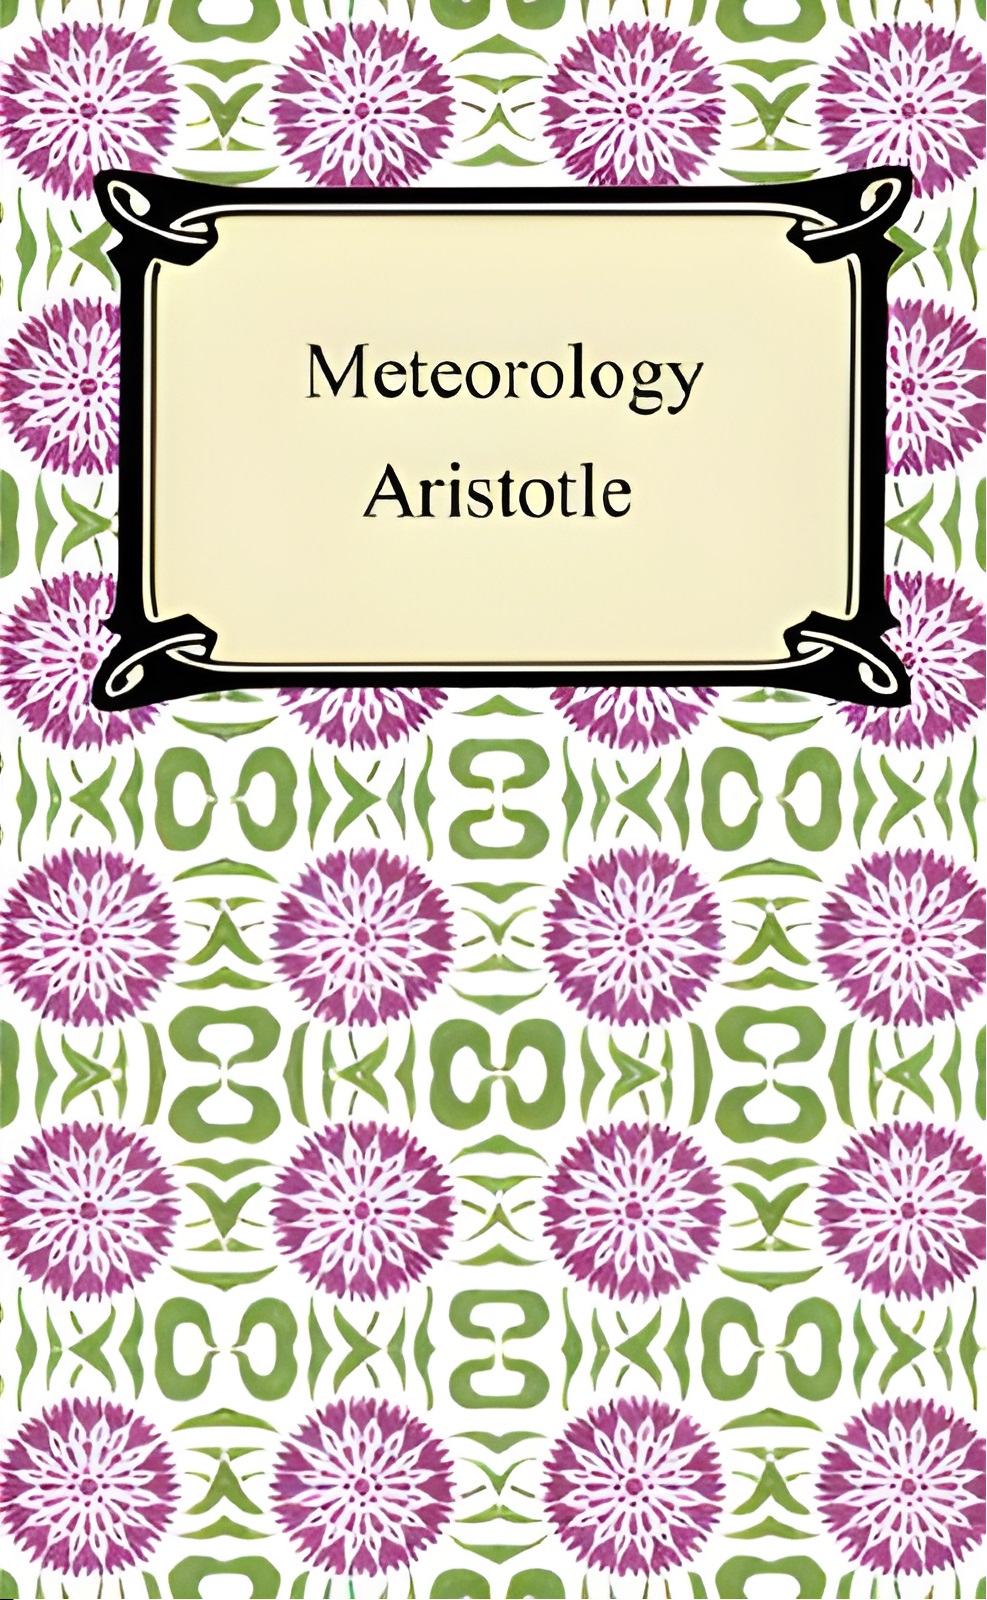 METEOROLOGY - Aristotle